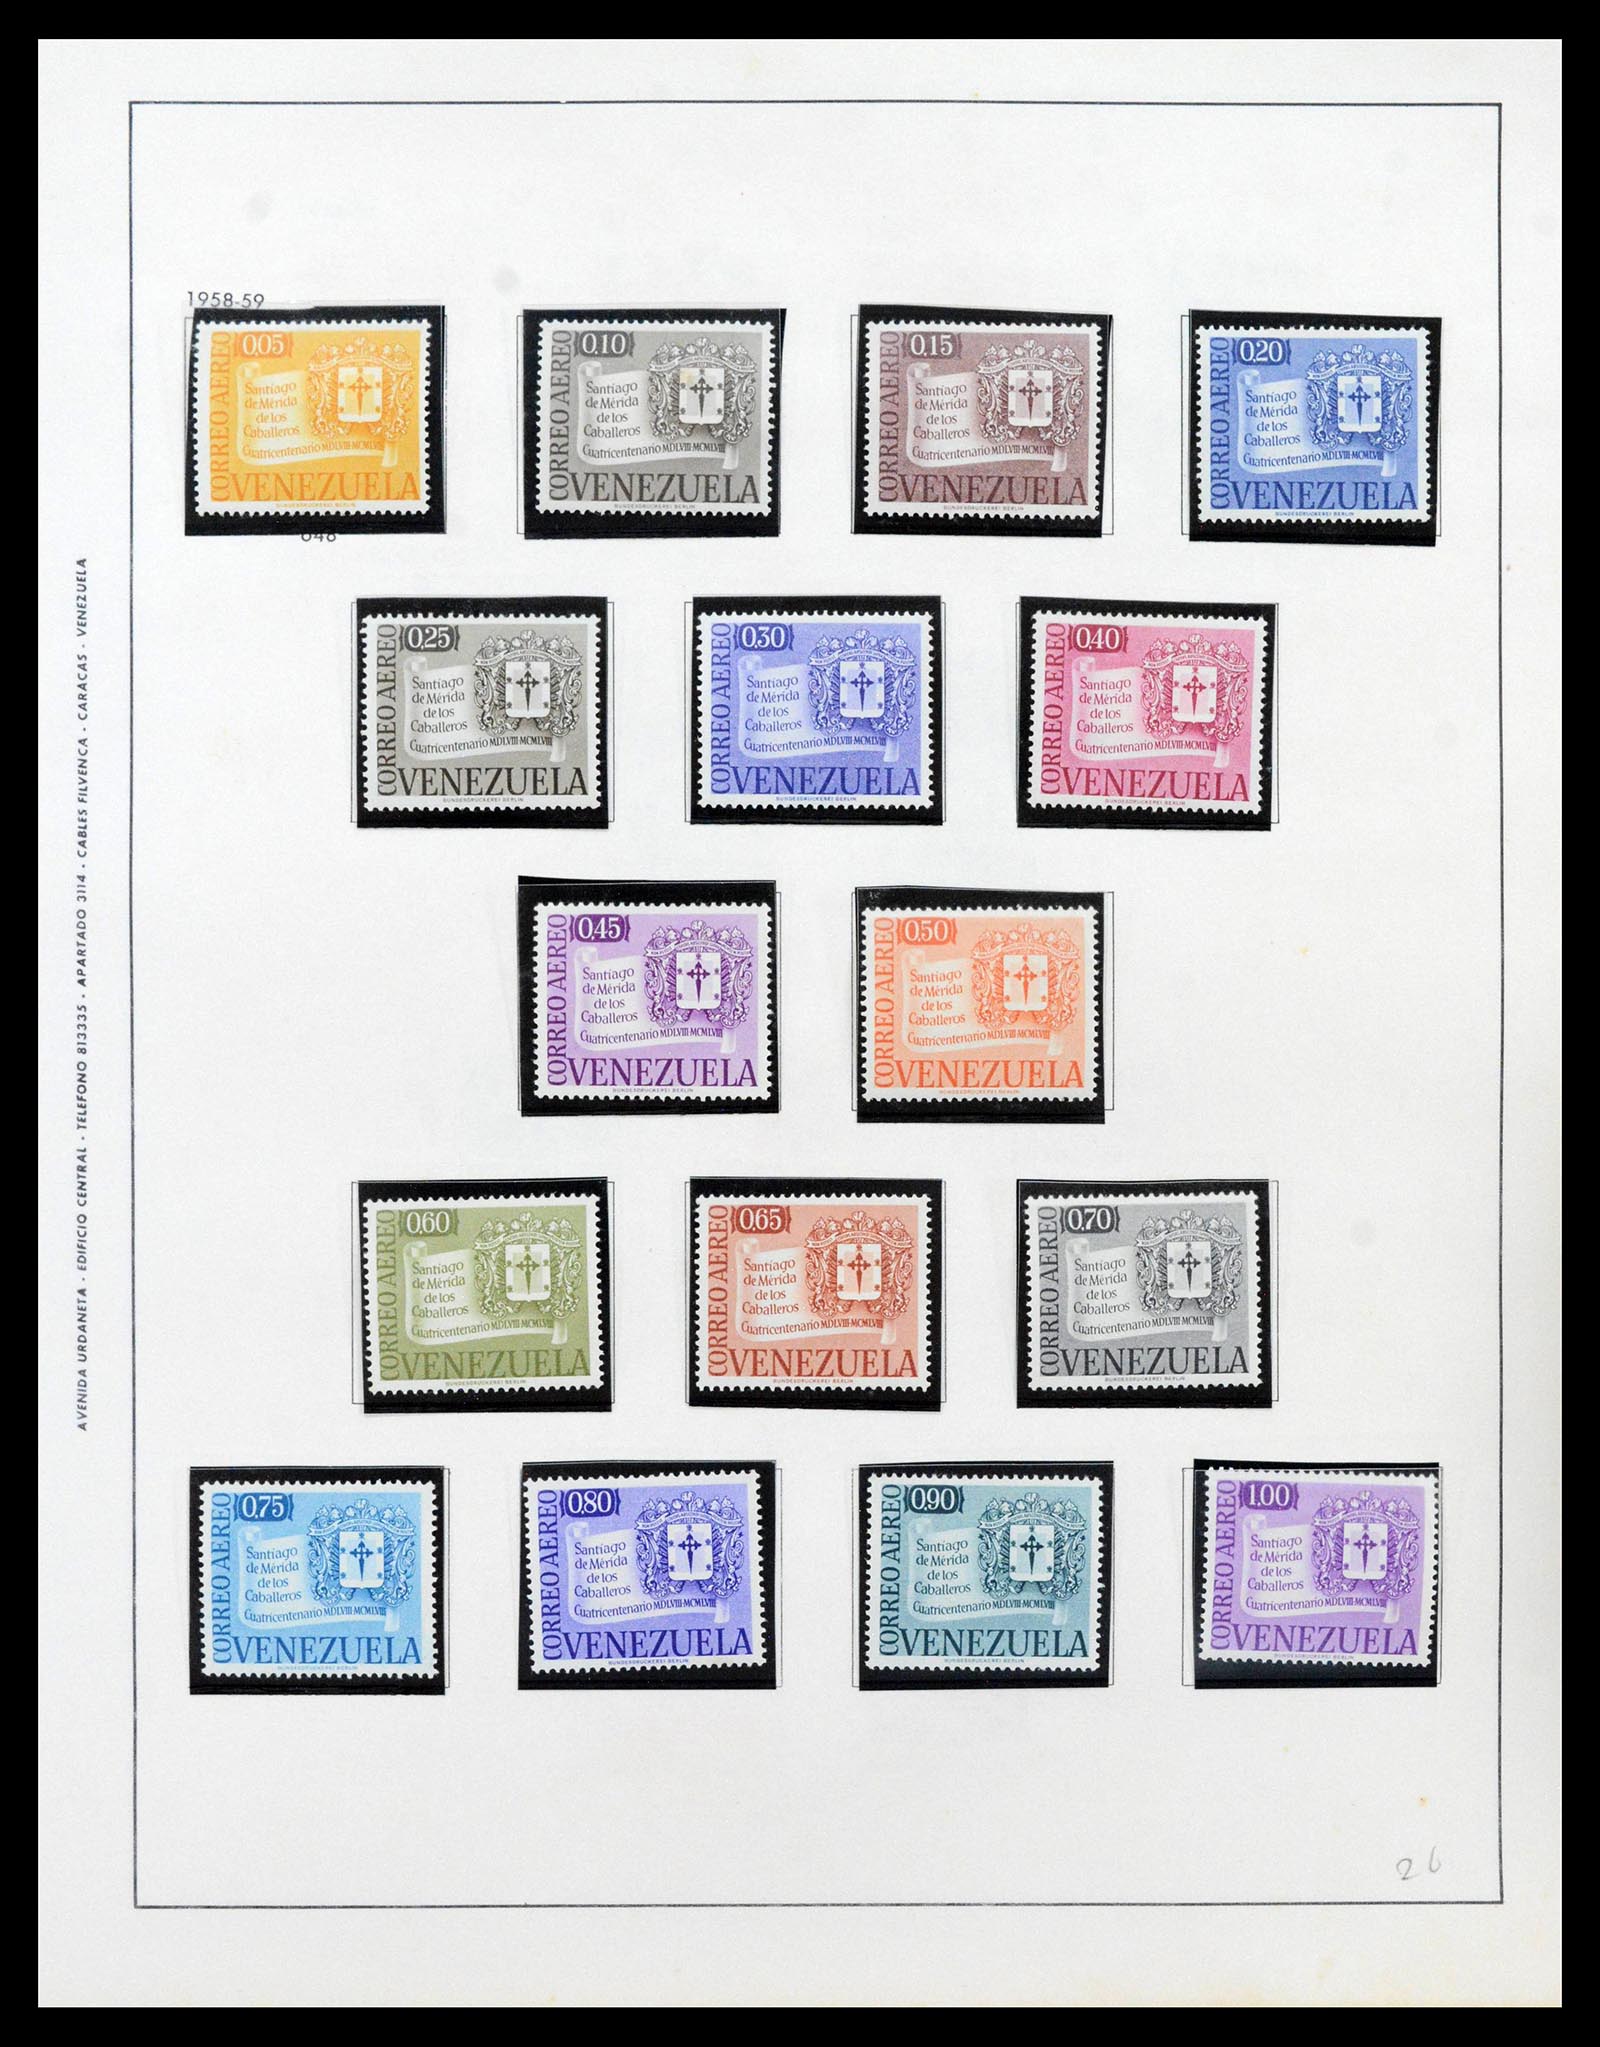 39436 0040 - Stamp collection 39436 Venezuela 1859-1985.